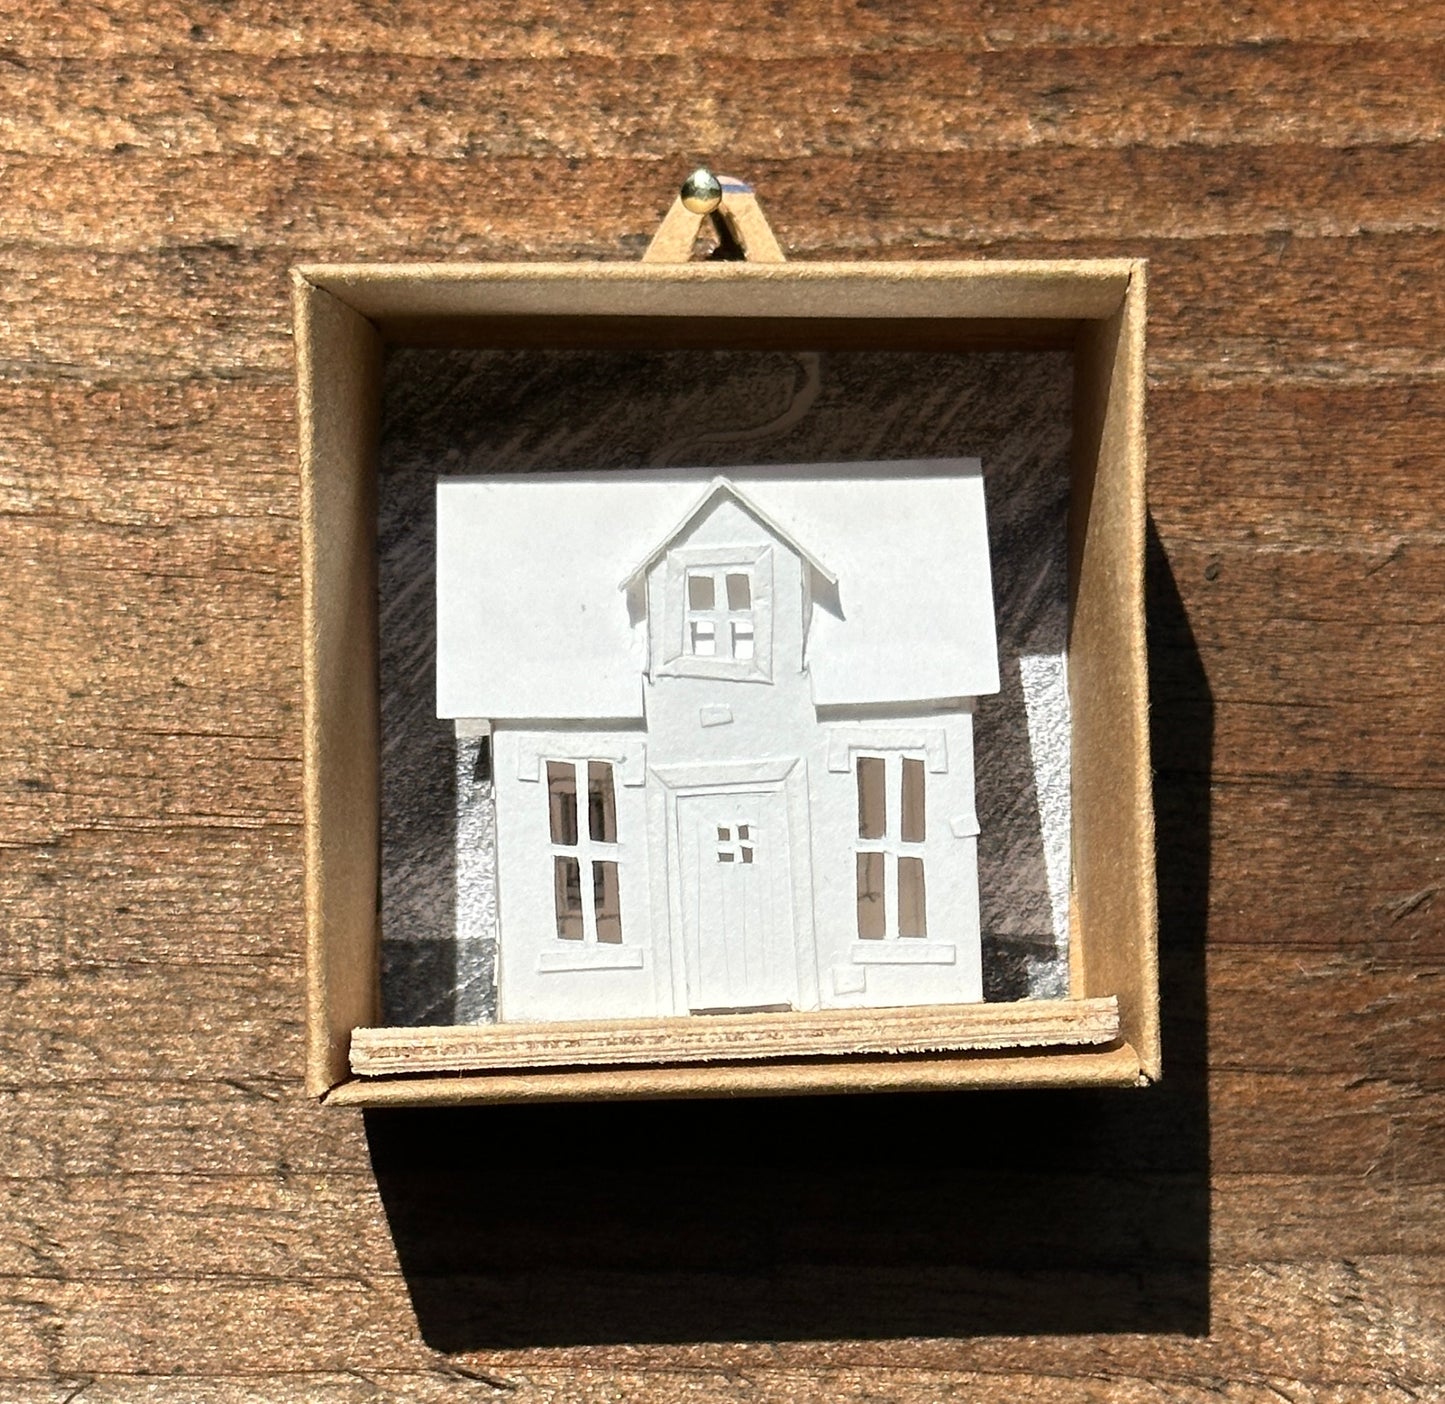  MiniatureMiniature  handmade paper house on plywood base in card display box.